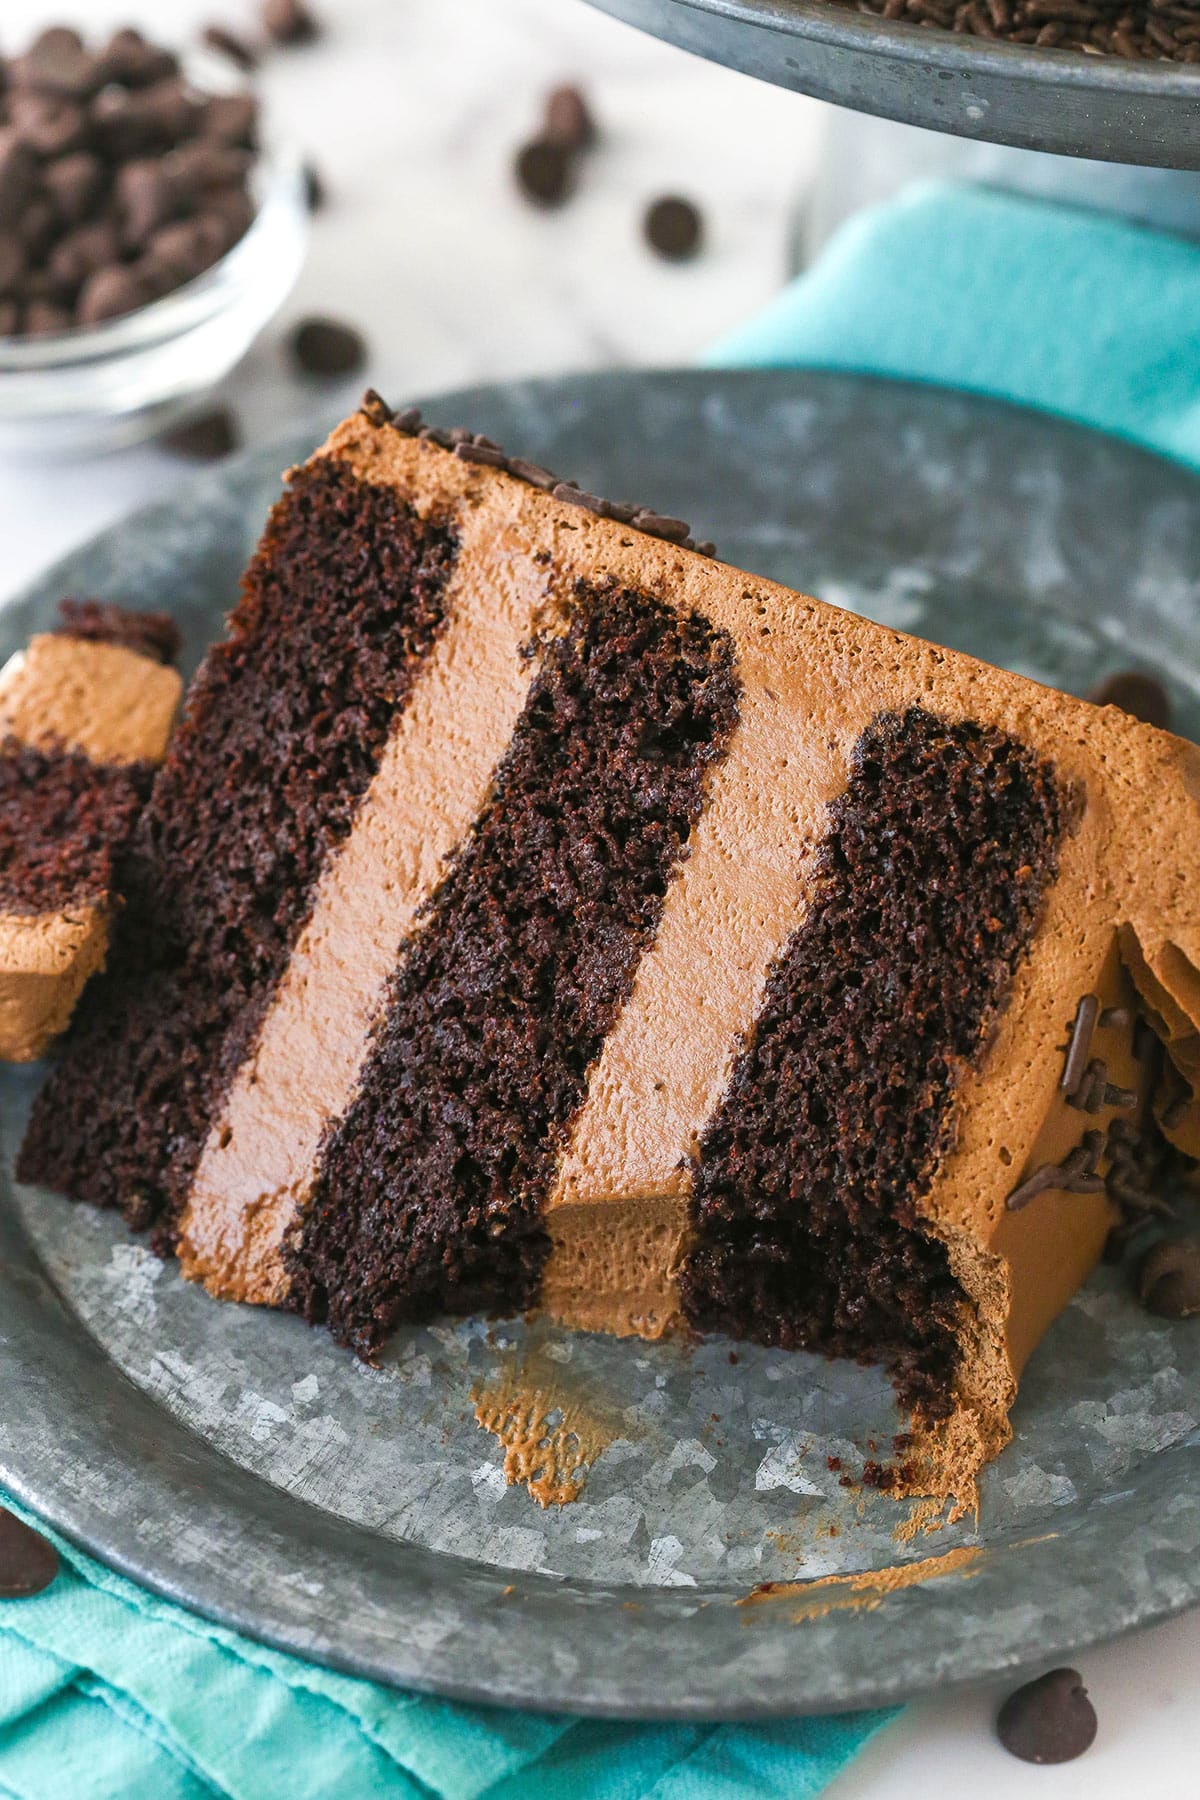 Extra Moist Triple Chocolate Ganache Cake: a Bakery Recipe - Amycakes Bakes